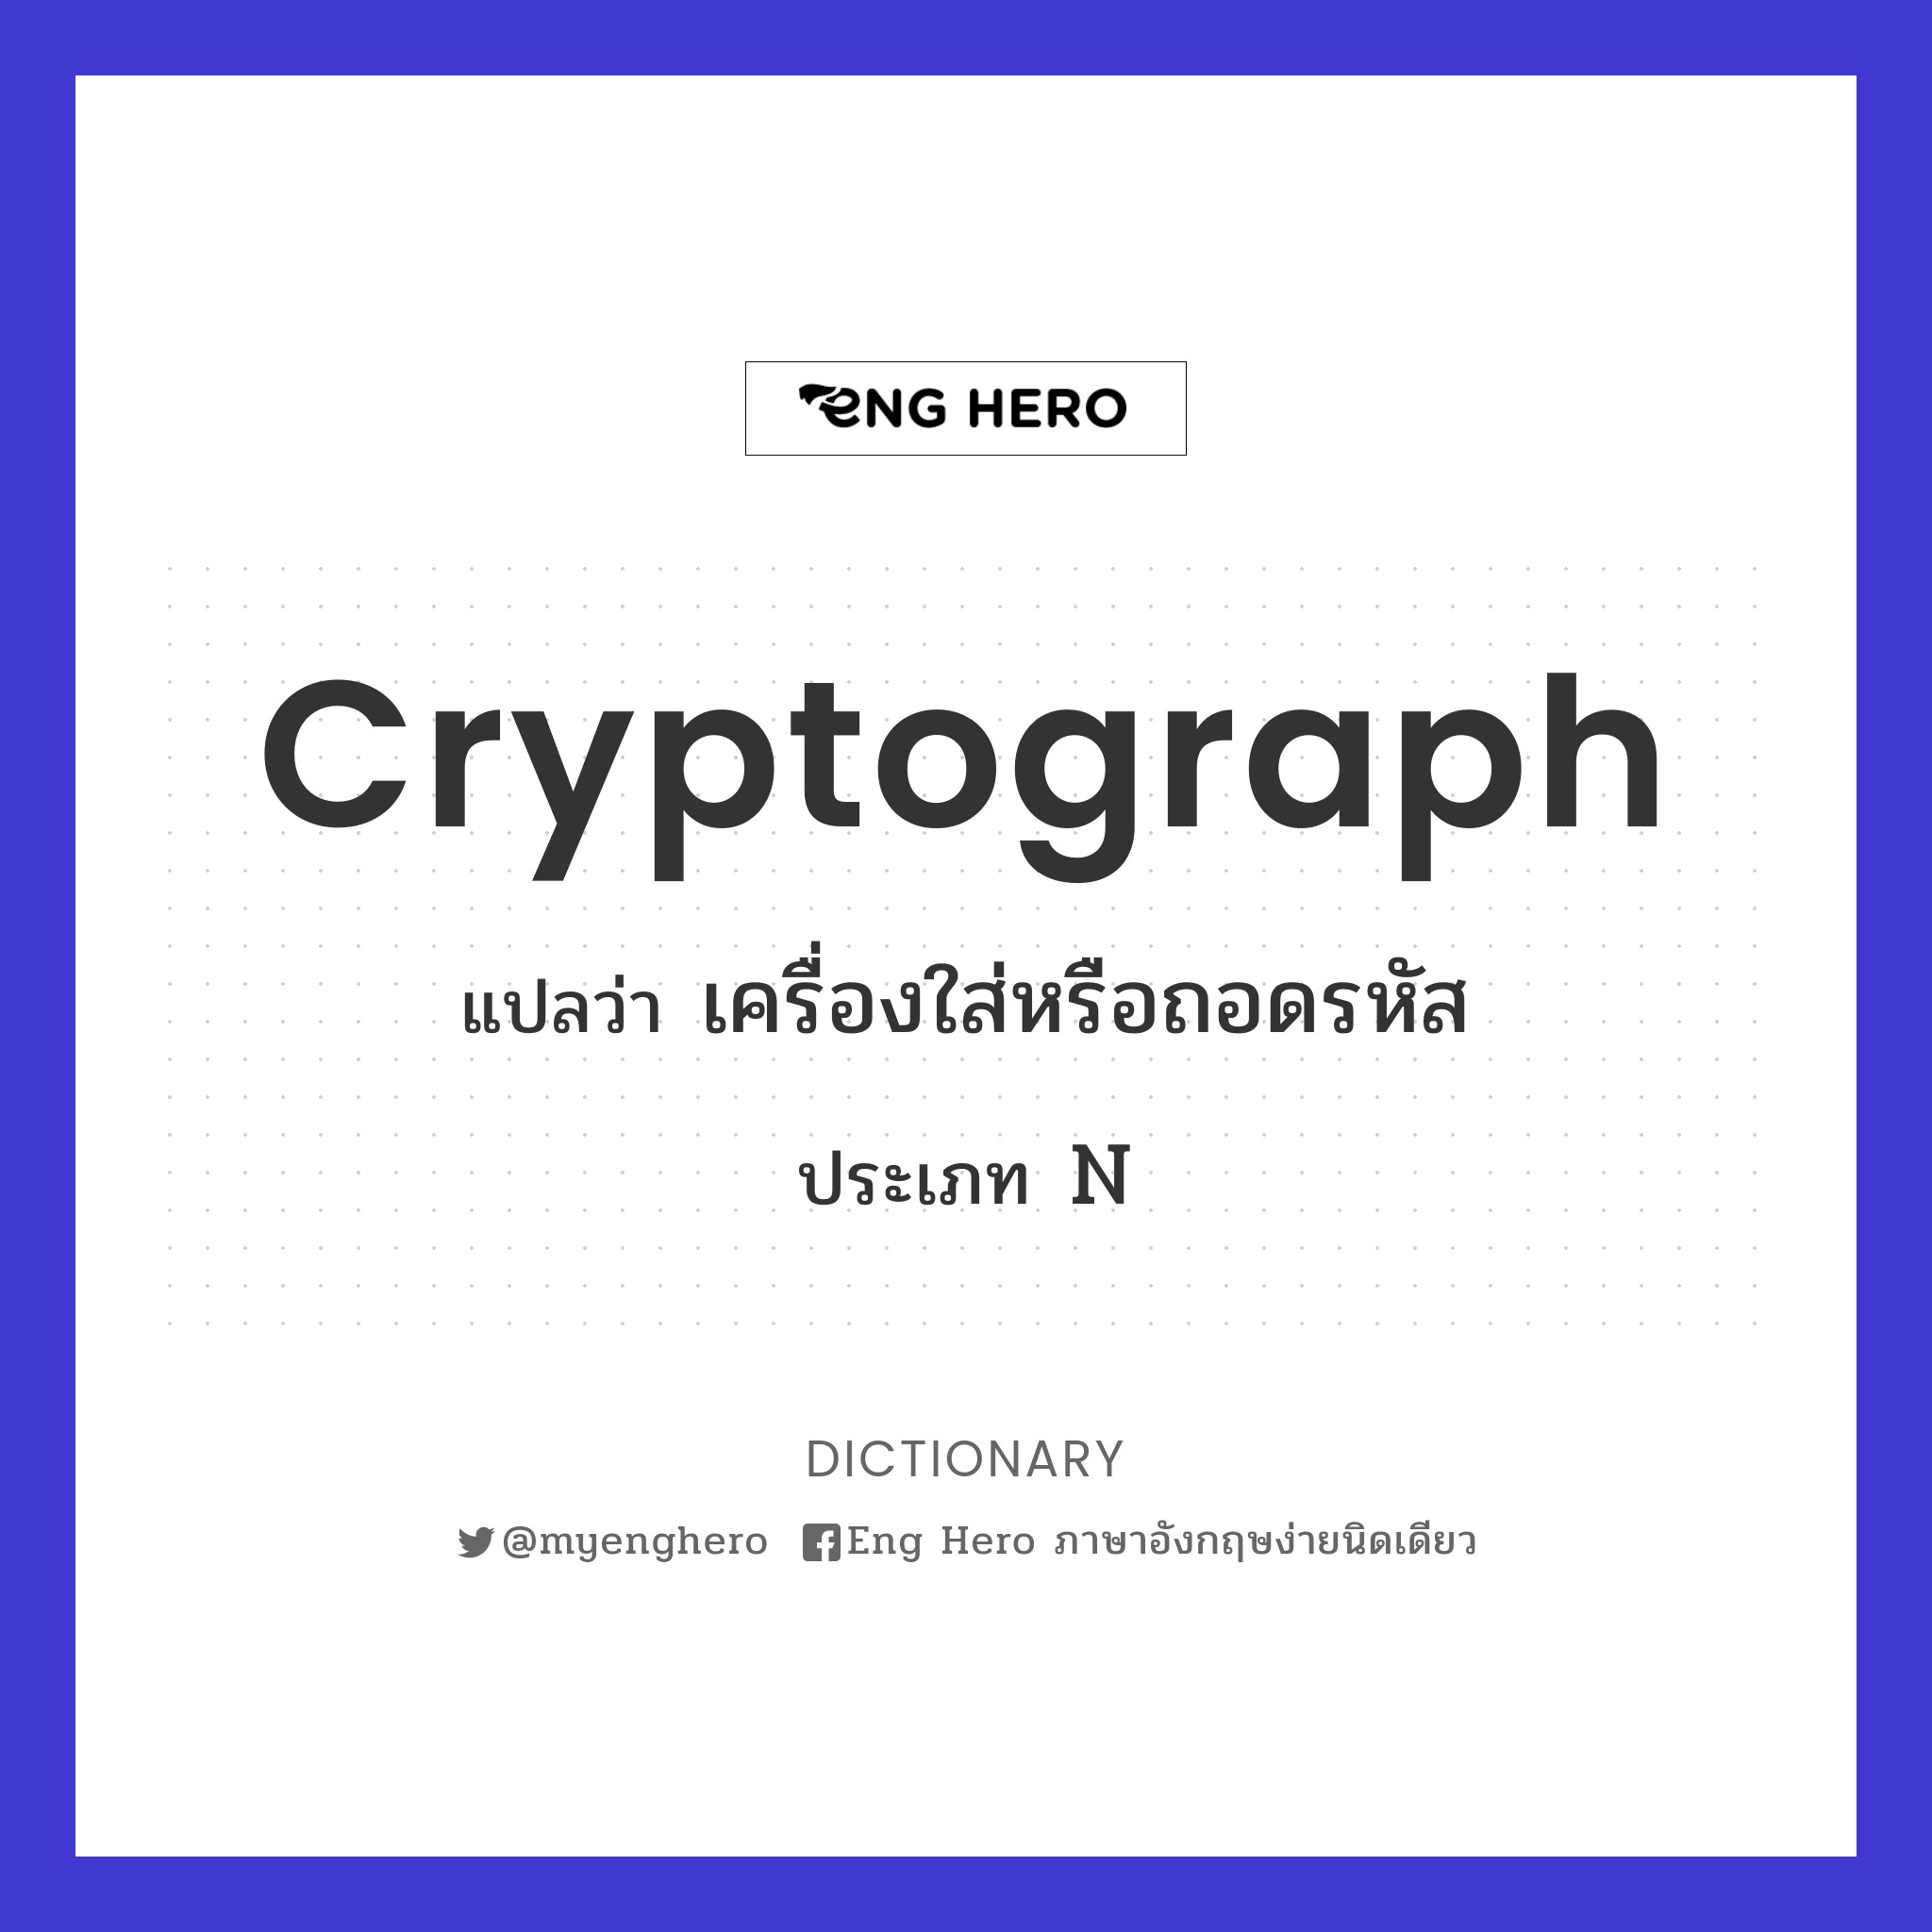 cryptograph